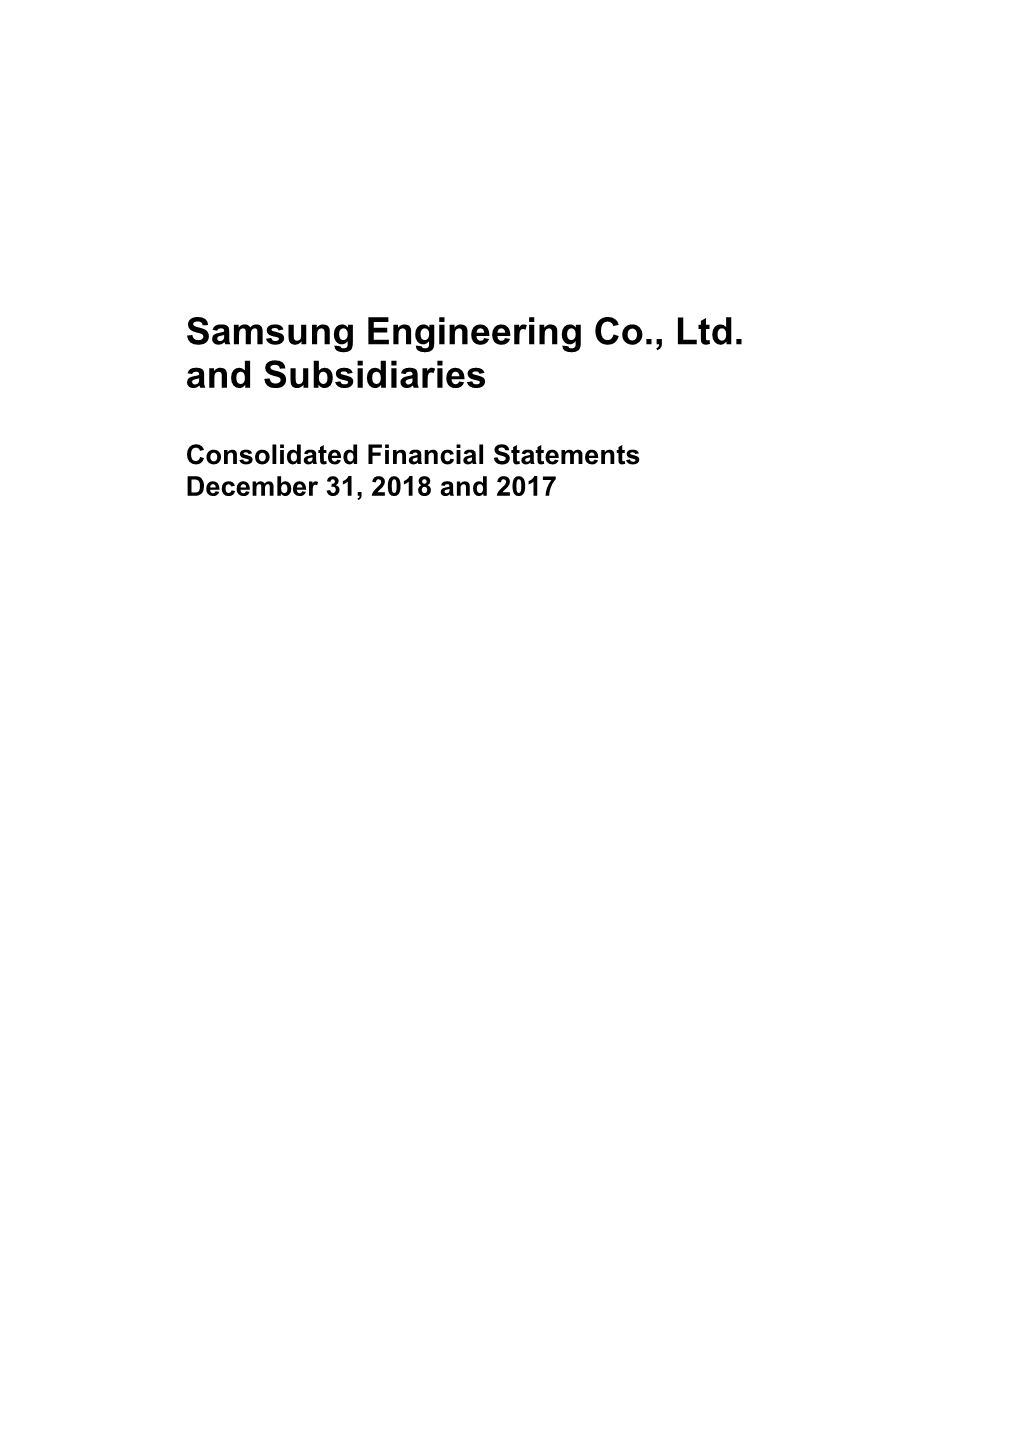 Samsung Engineering Co., Ltd. and Subsidiaries